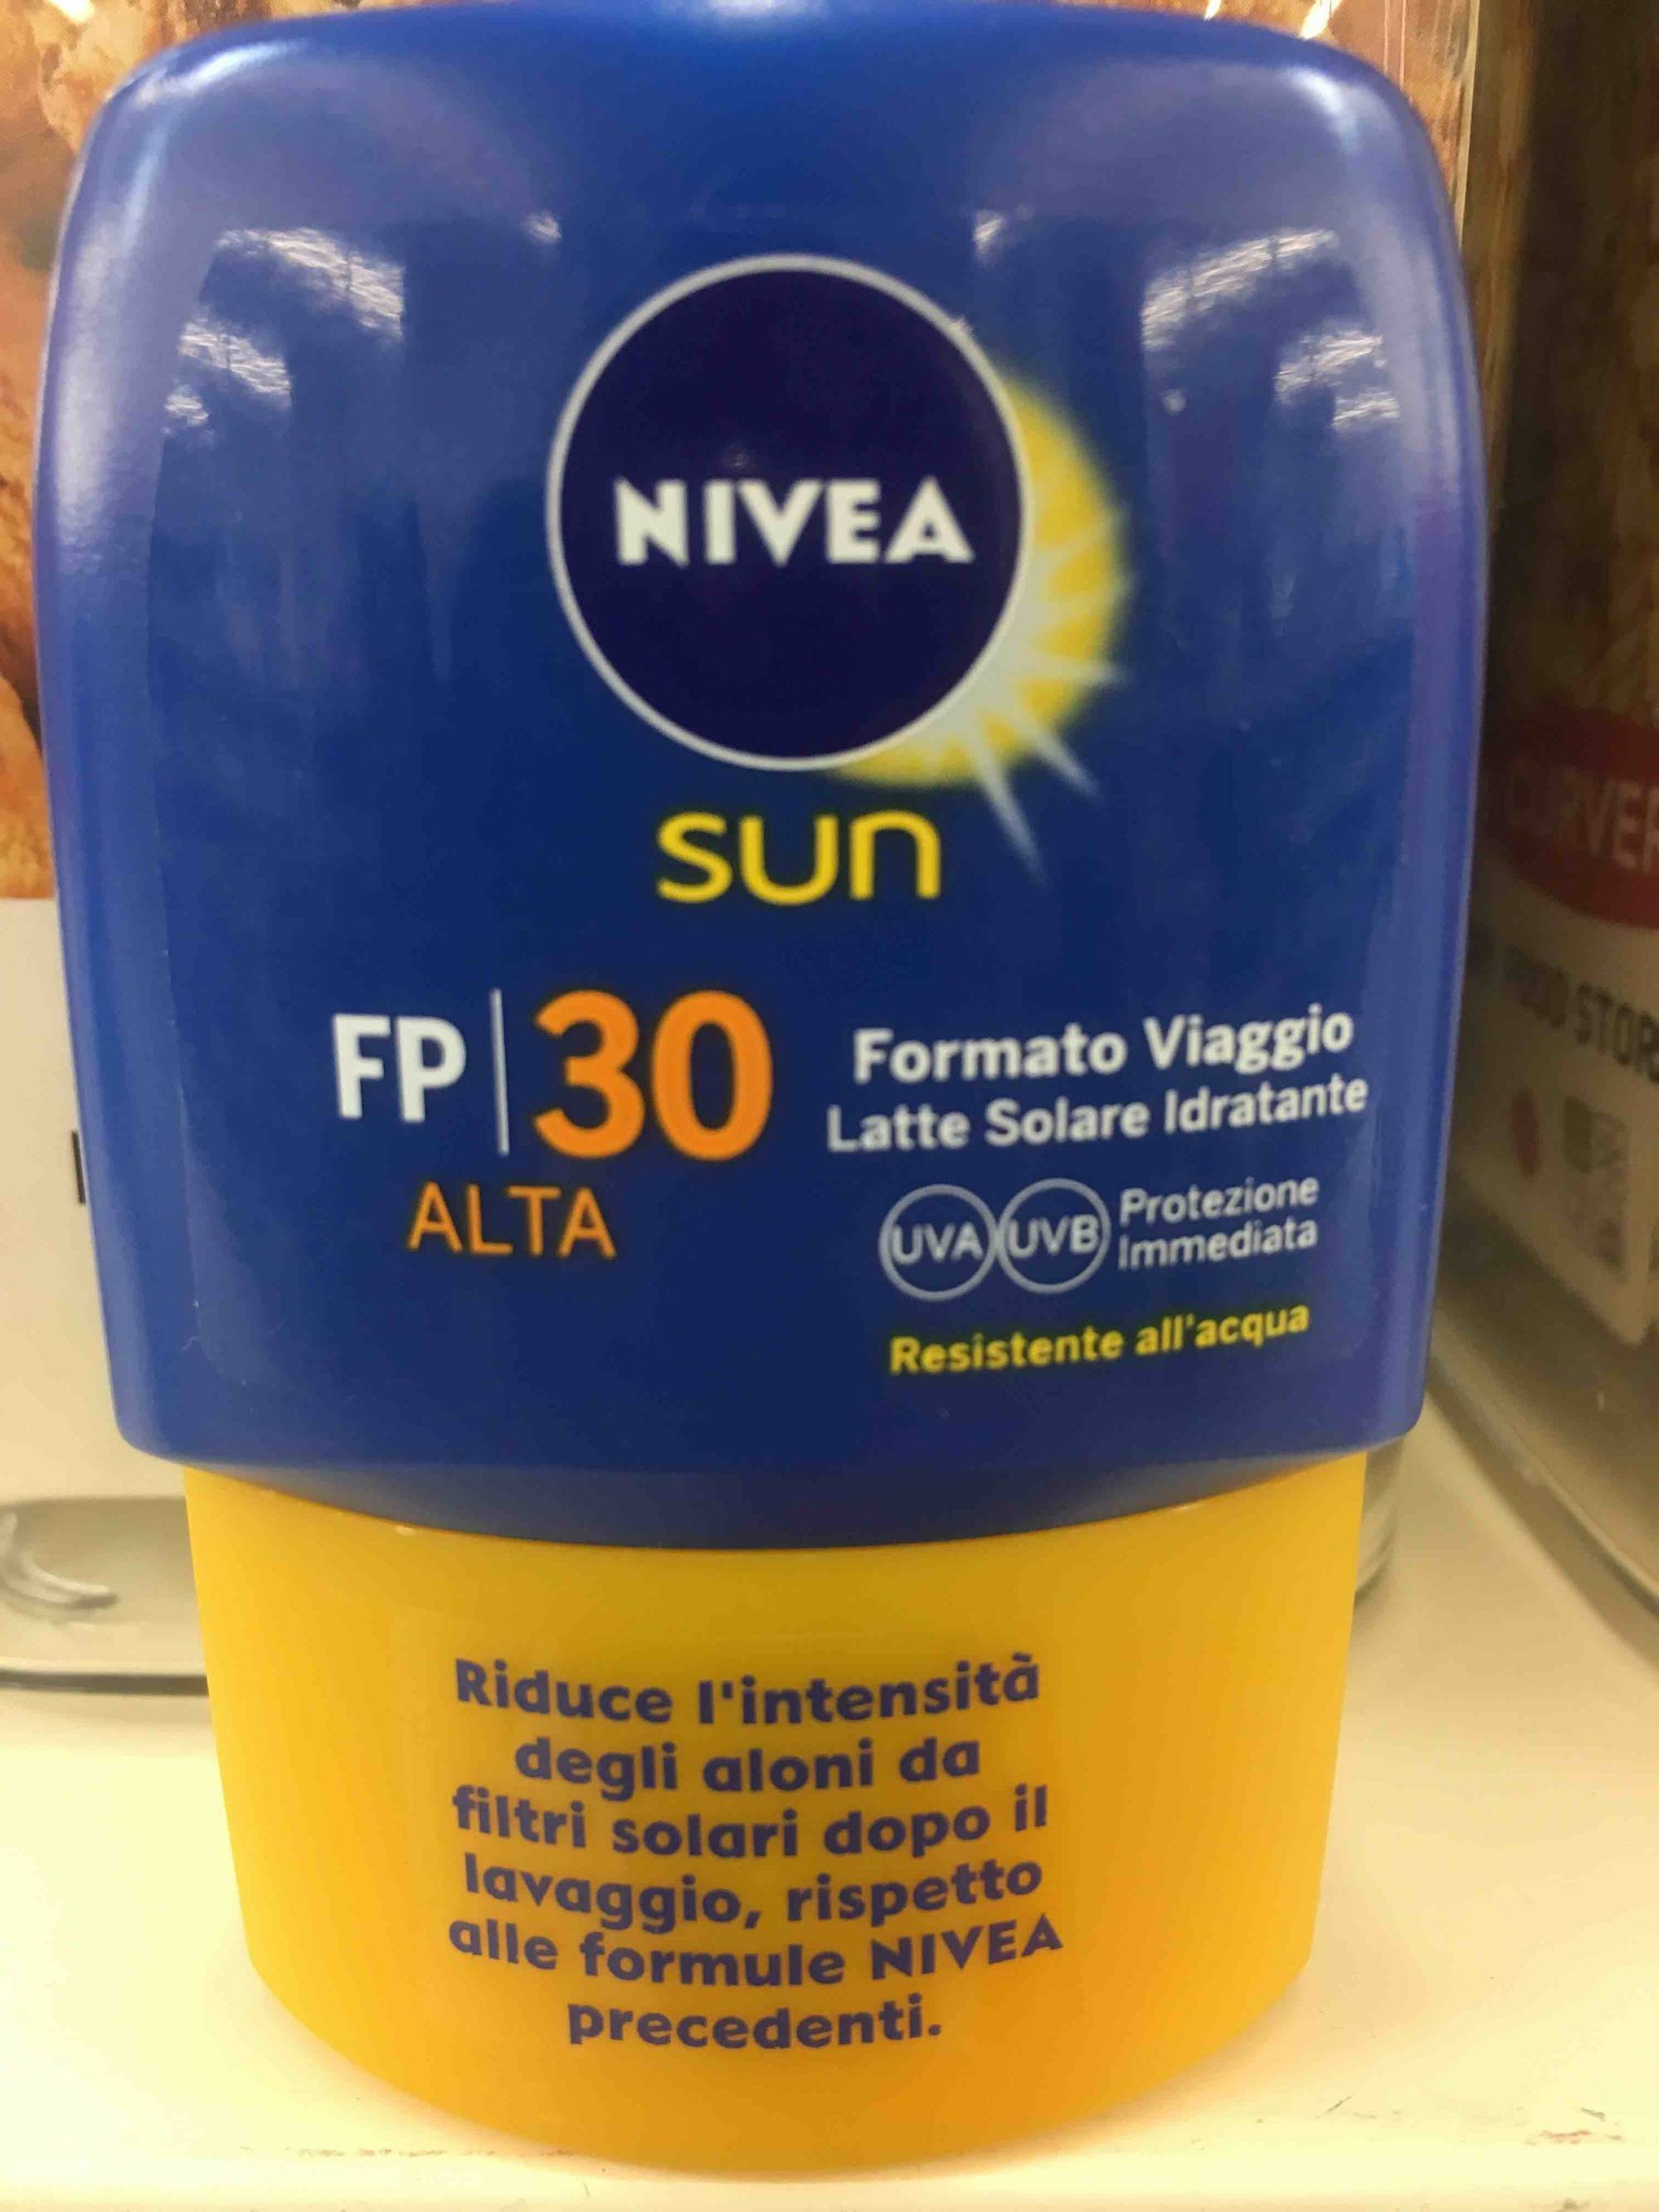 NIVEA - Sun - Latte solare idratante FP 30 alta